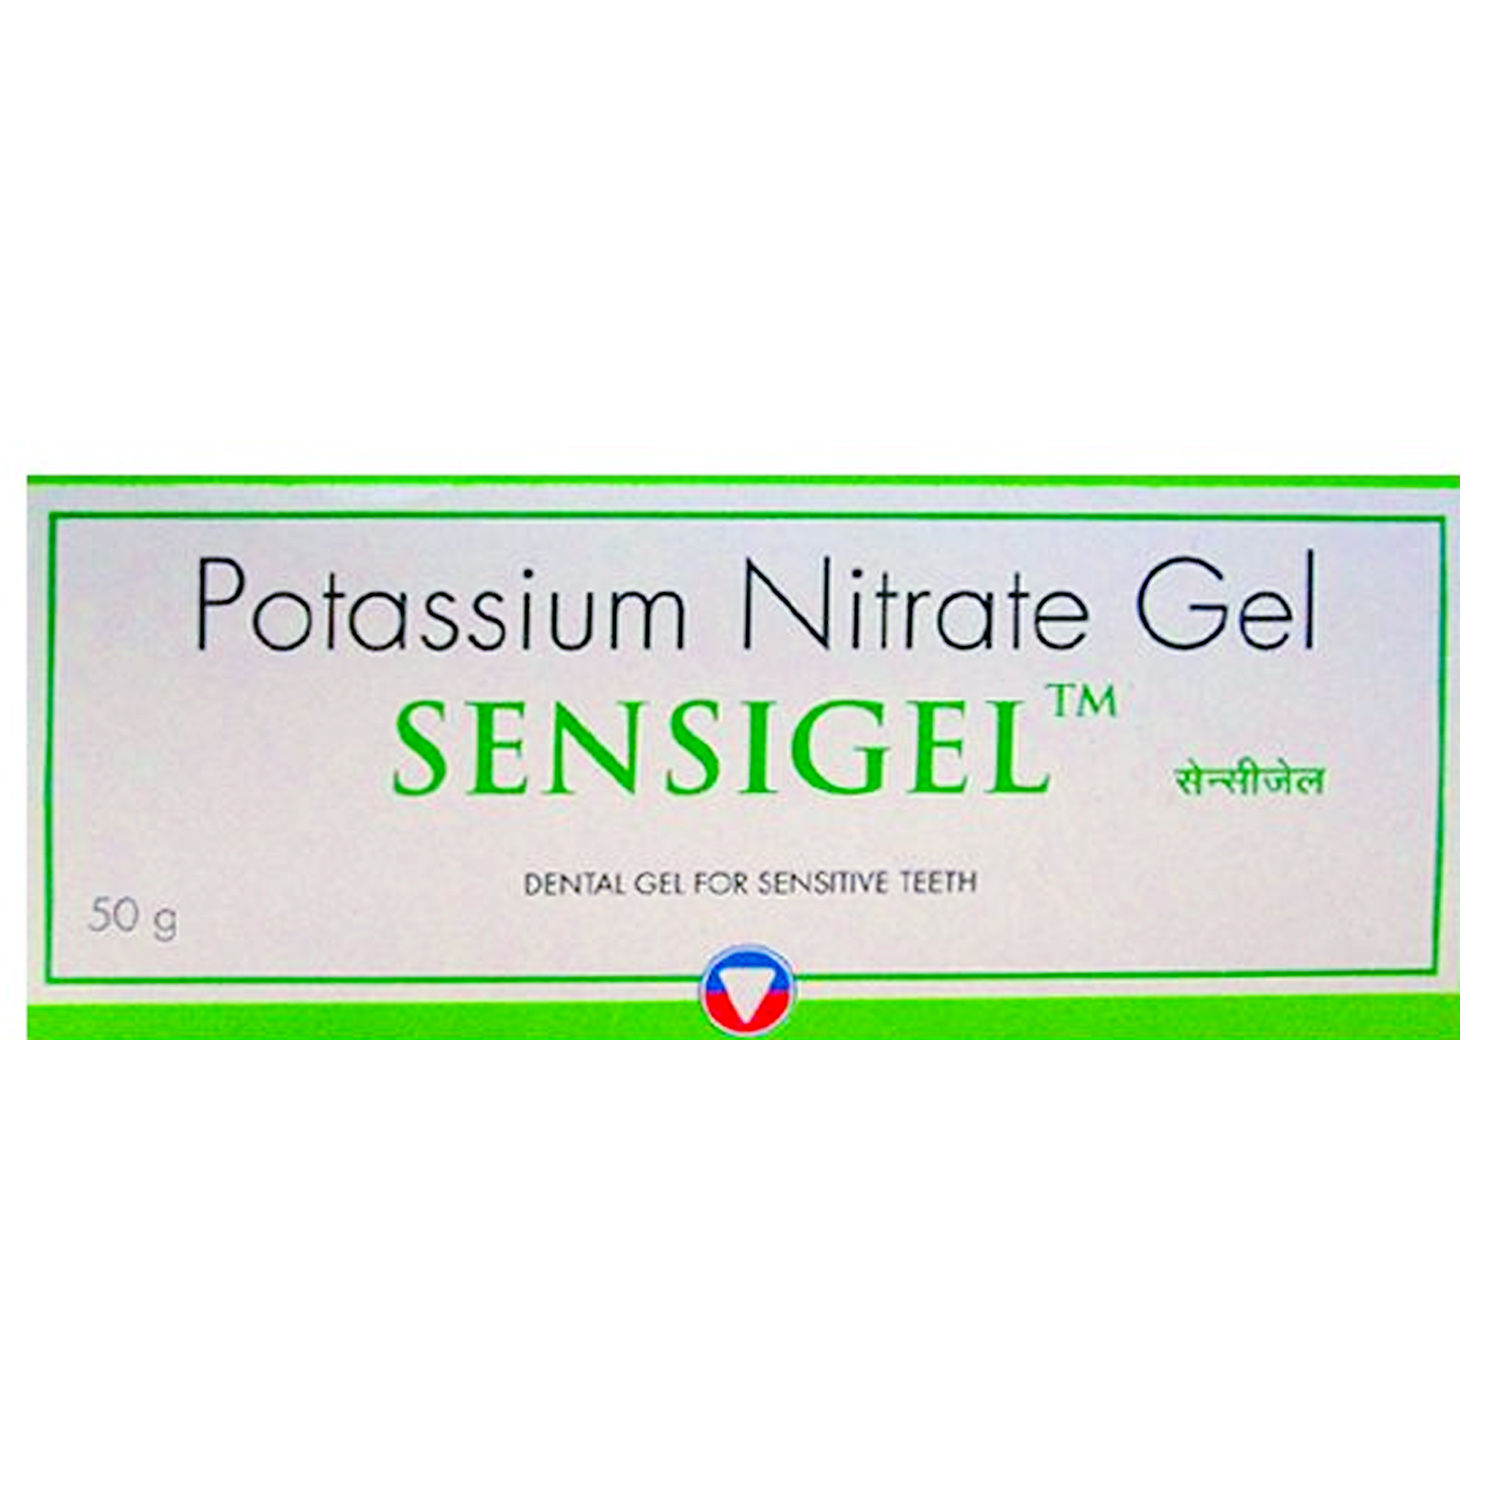 Sensi Gel Dental Gel For Sensitive Teeth, 50 gm, Pack of 1 